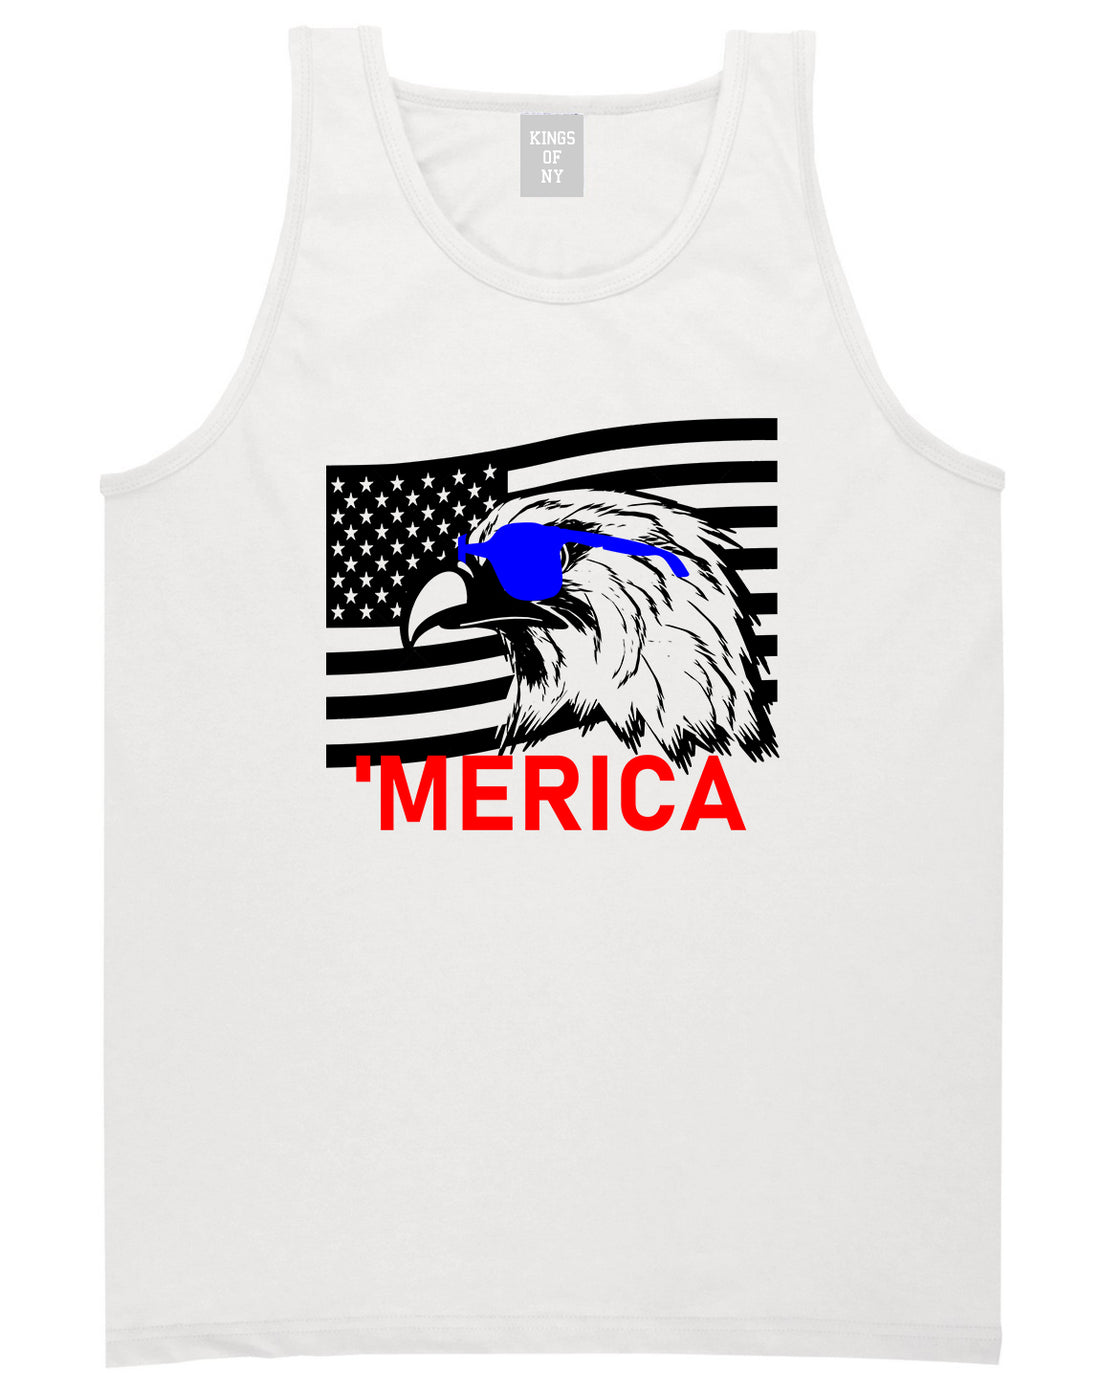 Merica Eagle Flag Funny Patriotic Mens Tank Top T-Shirt White